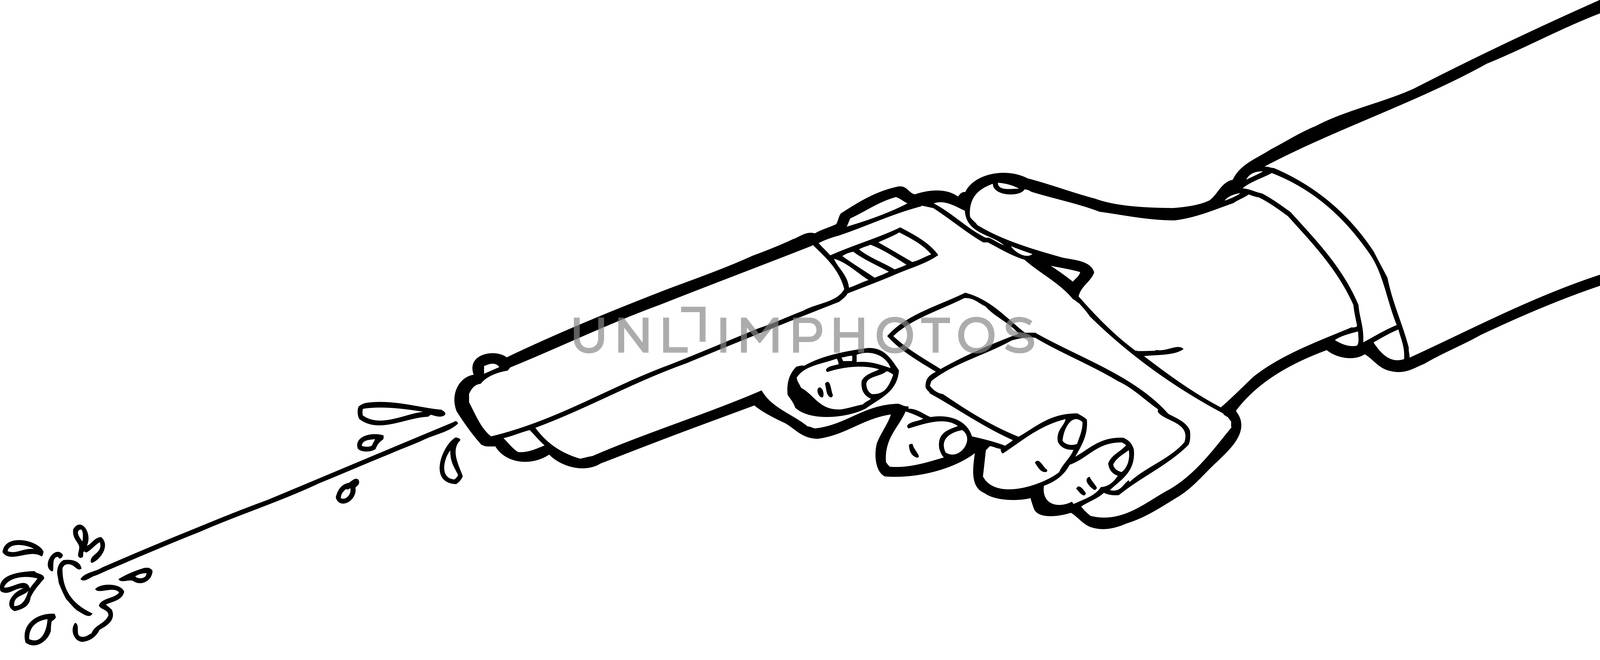 Cartoon outline of hand shooting squirt gun